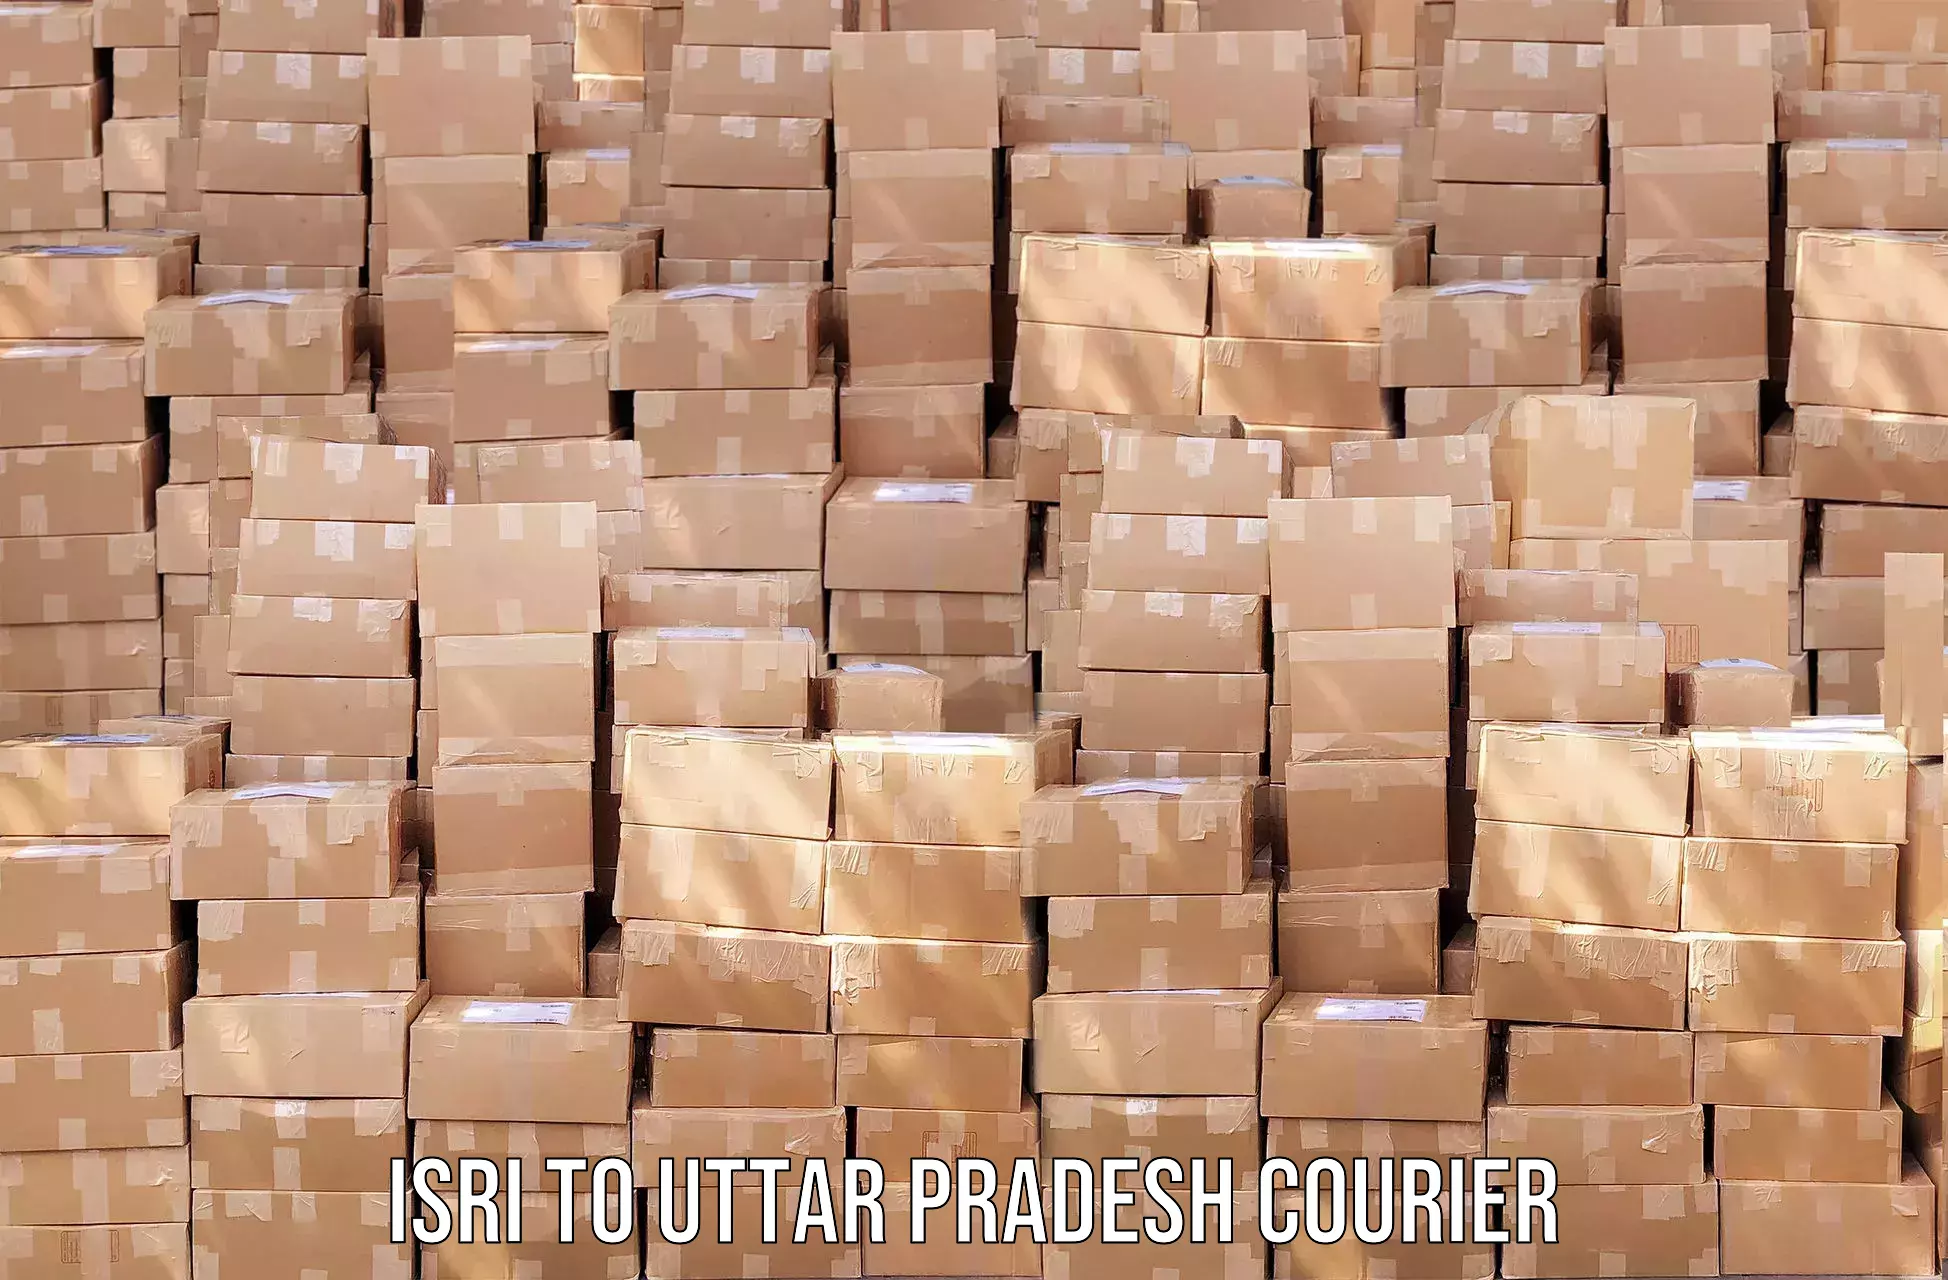 Courier service comparison Isri to Kulpahar